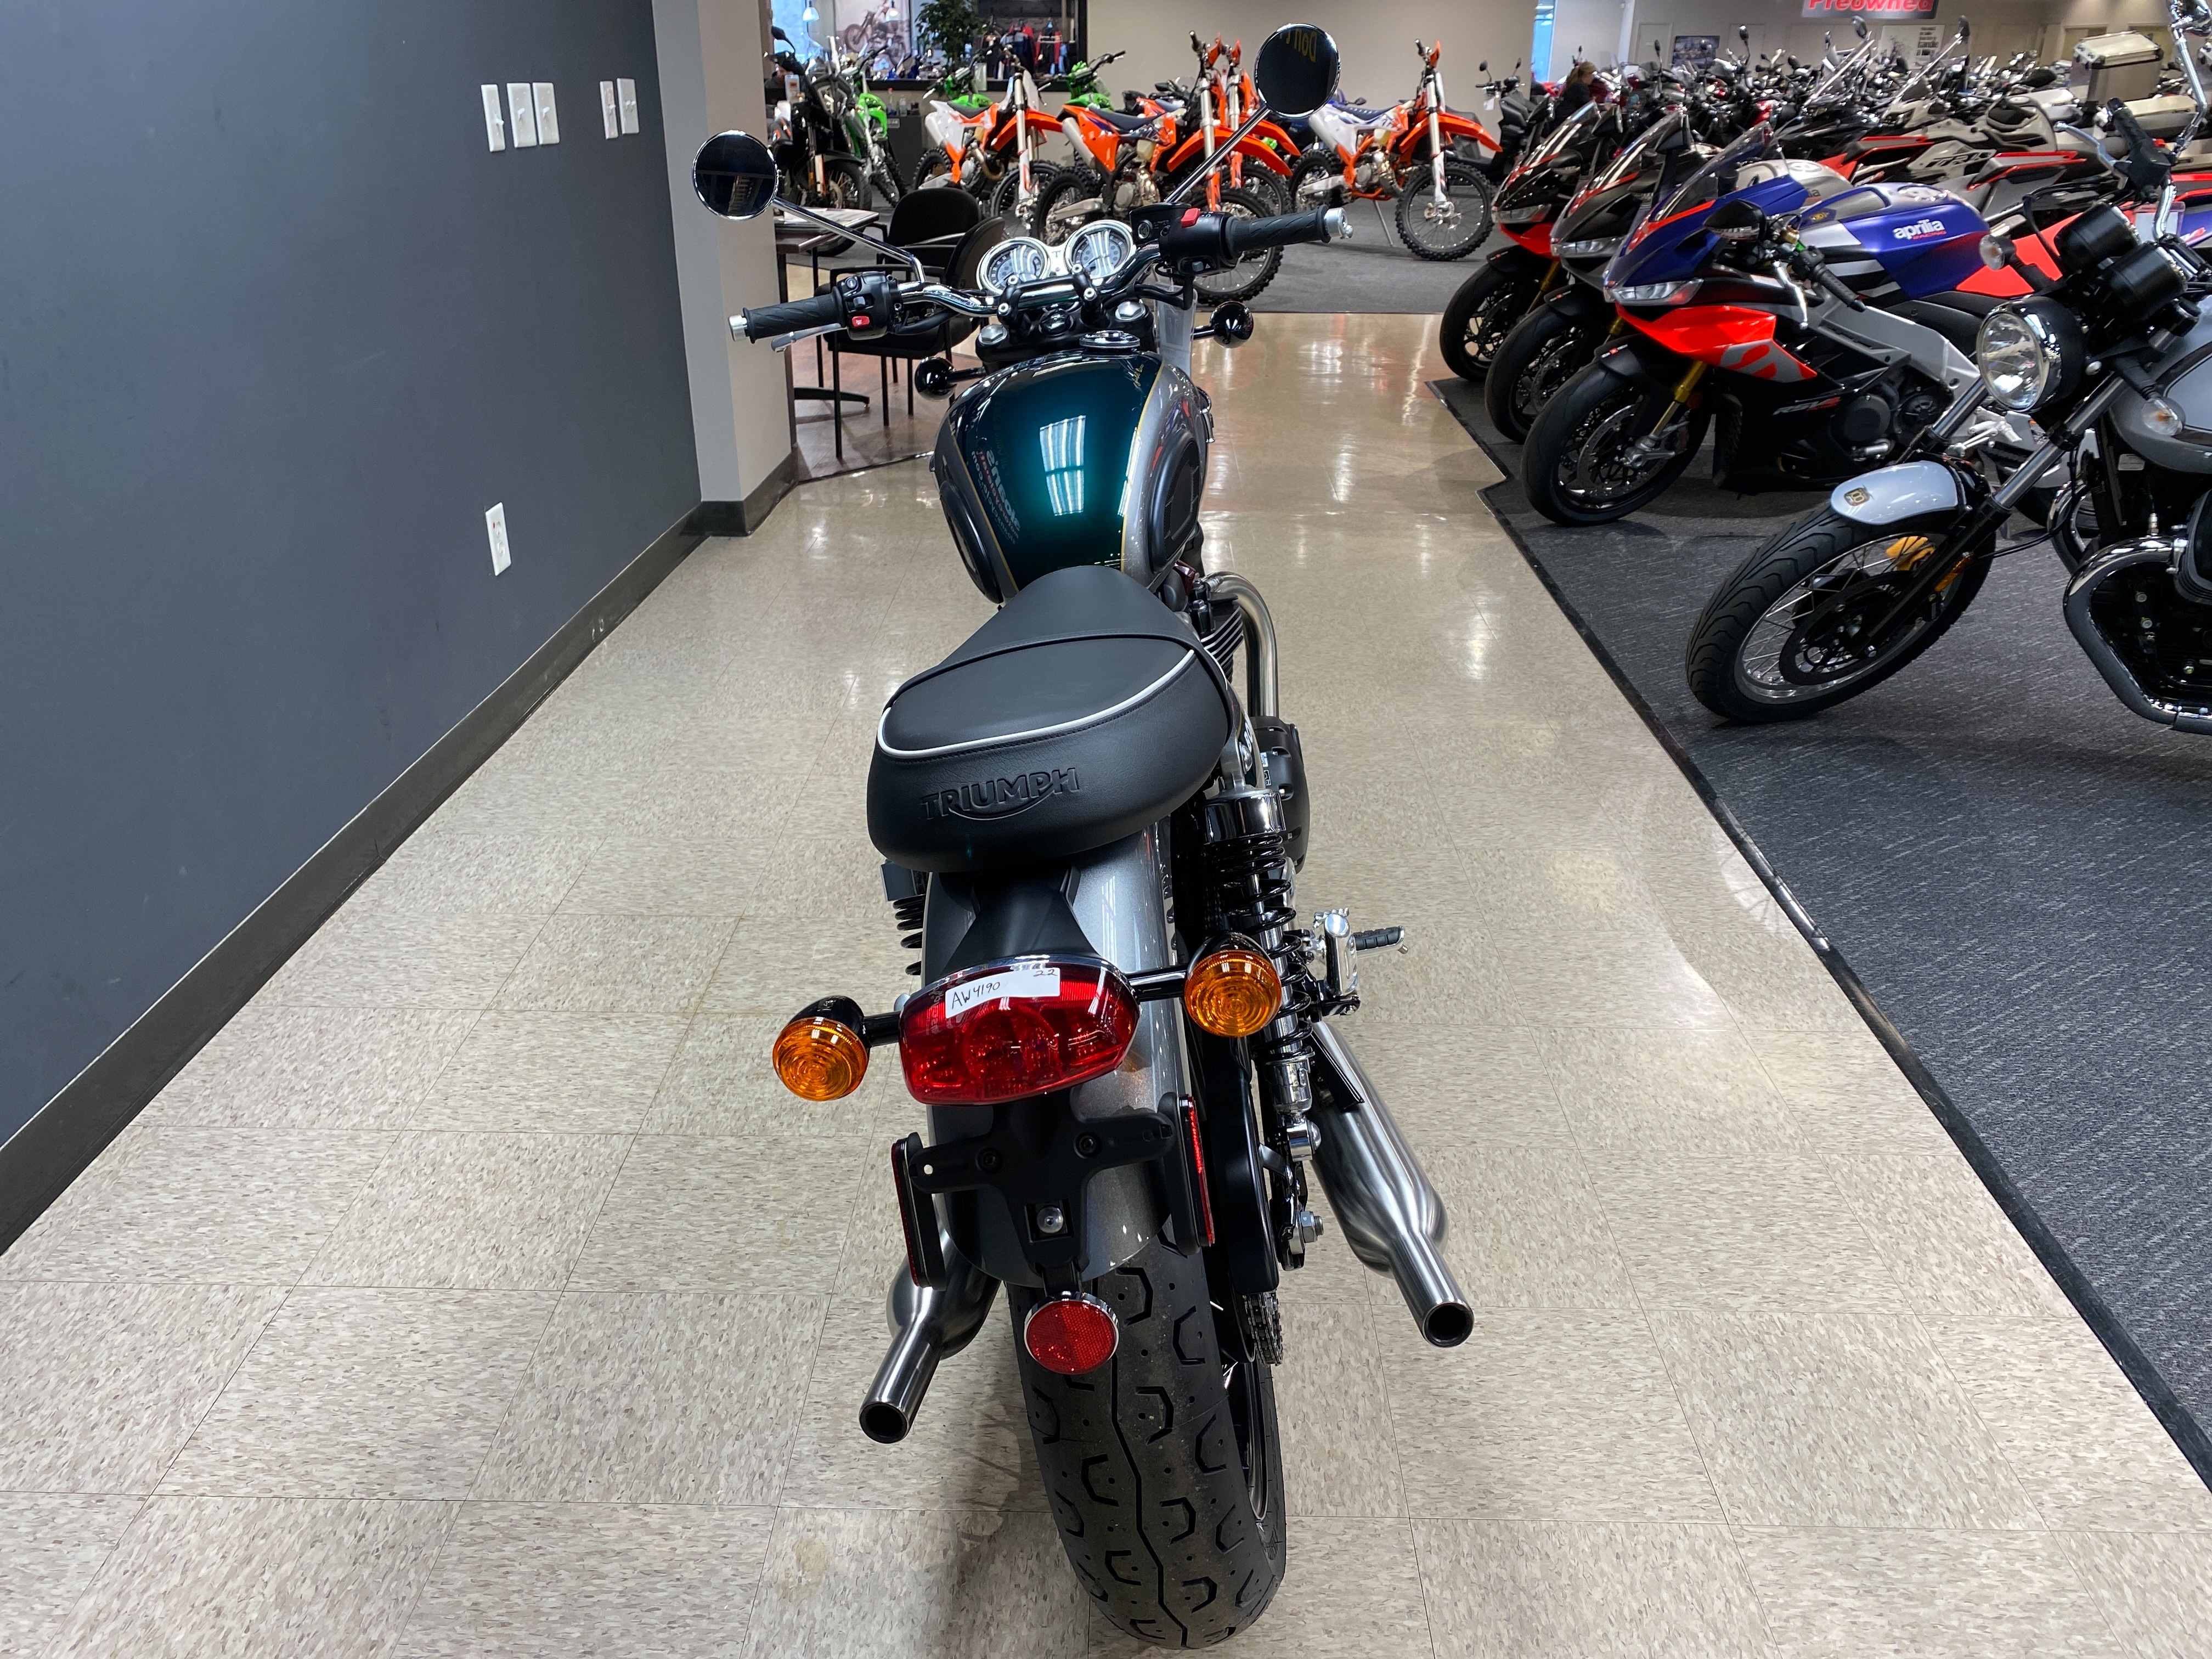 2022 Triumph Bonneville T100 Gold Line at Sloans Motorcycle ATV, Murfreesboro, TN, 37129